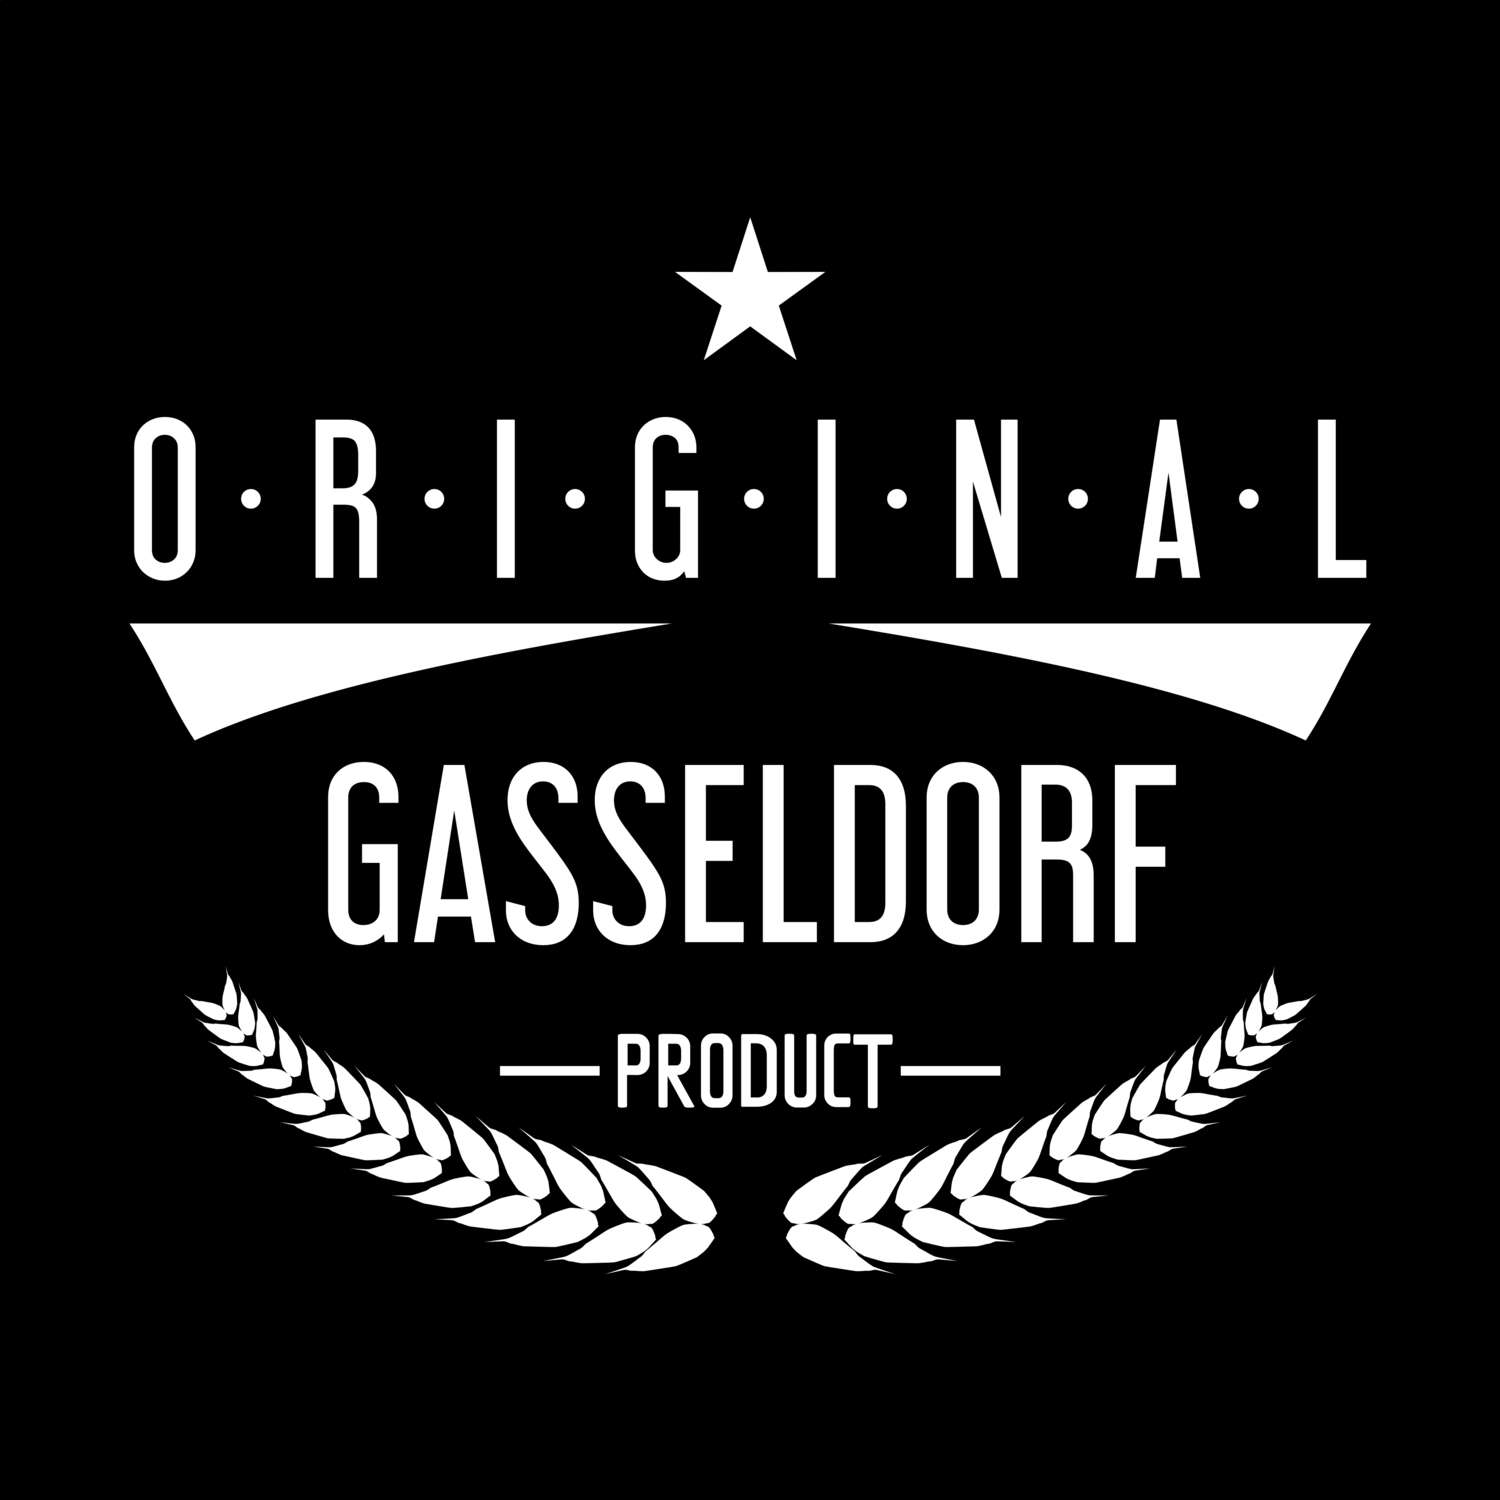 Gasseldorf T-Shirt »Original Product«